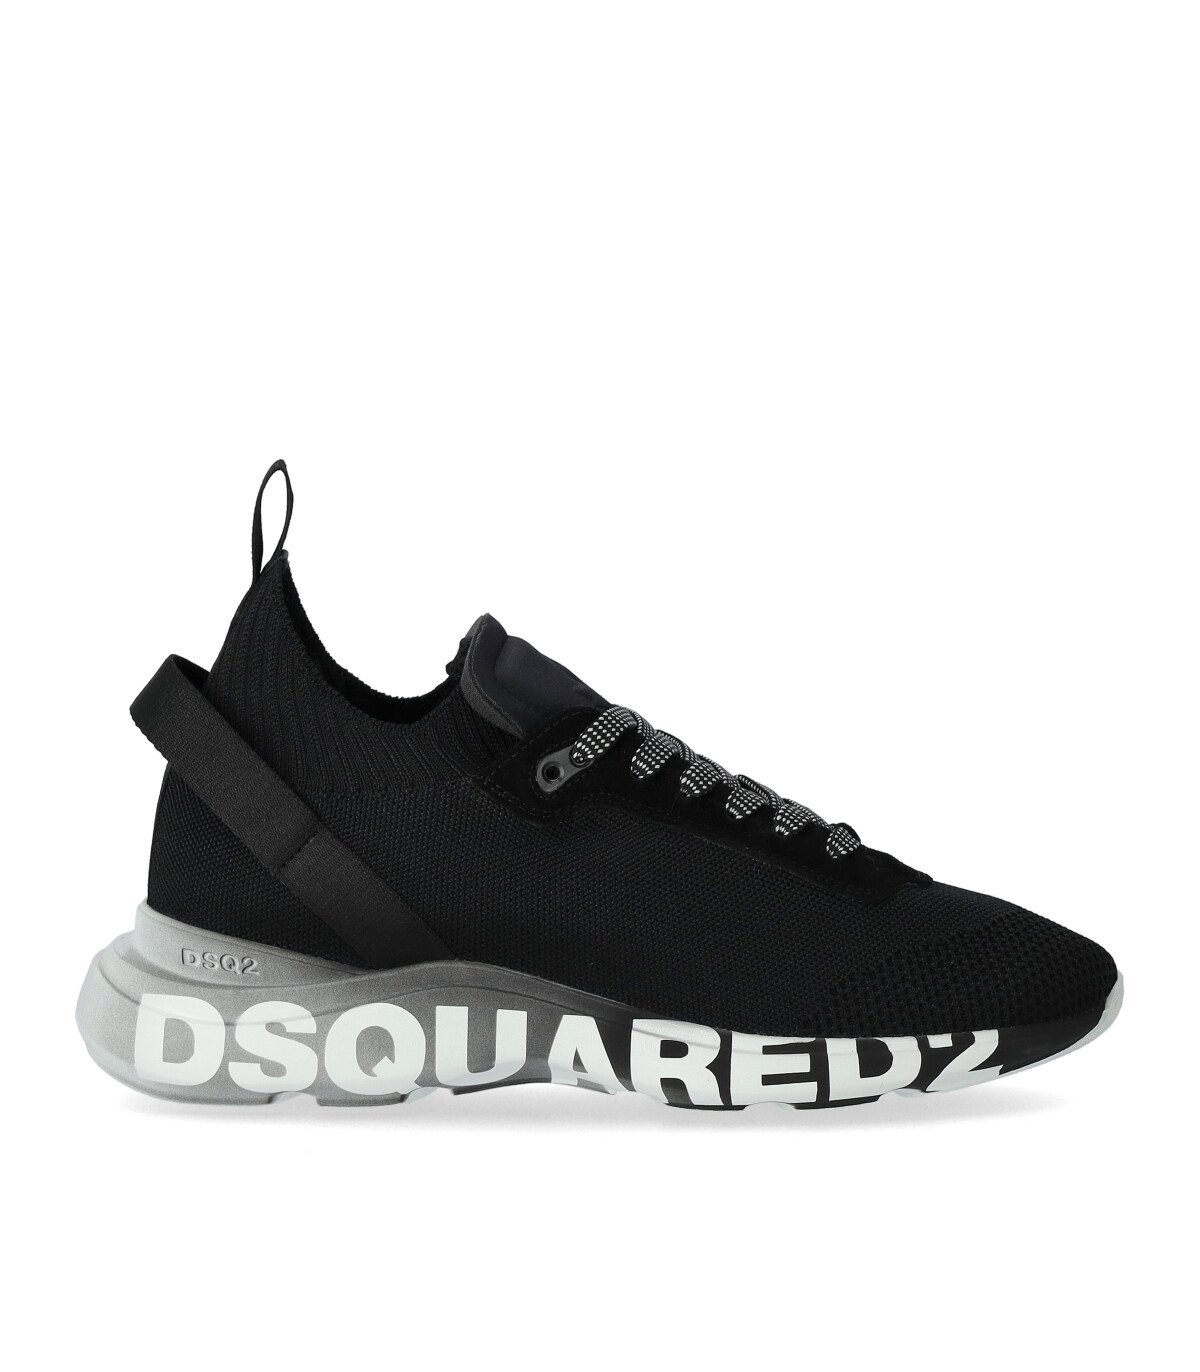 Мужские кроссовки Dsquared2 Fly Black с логотипом